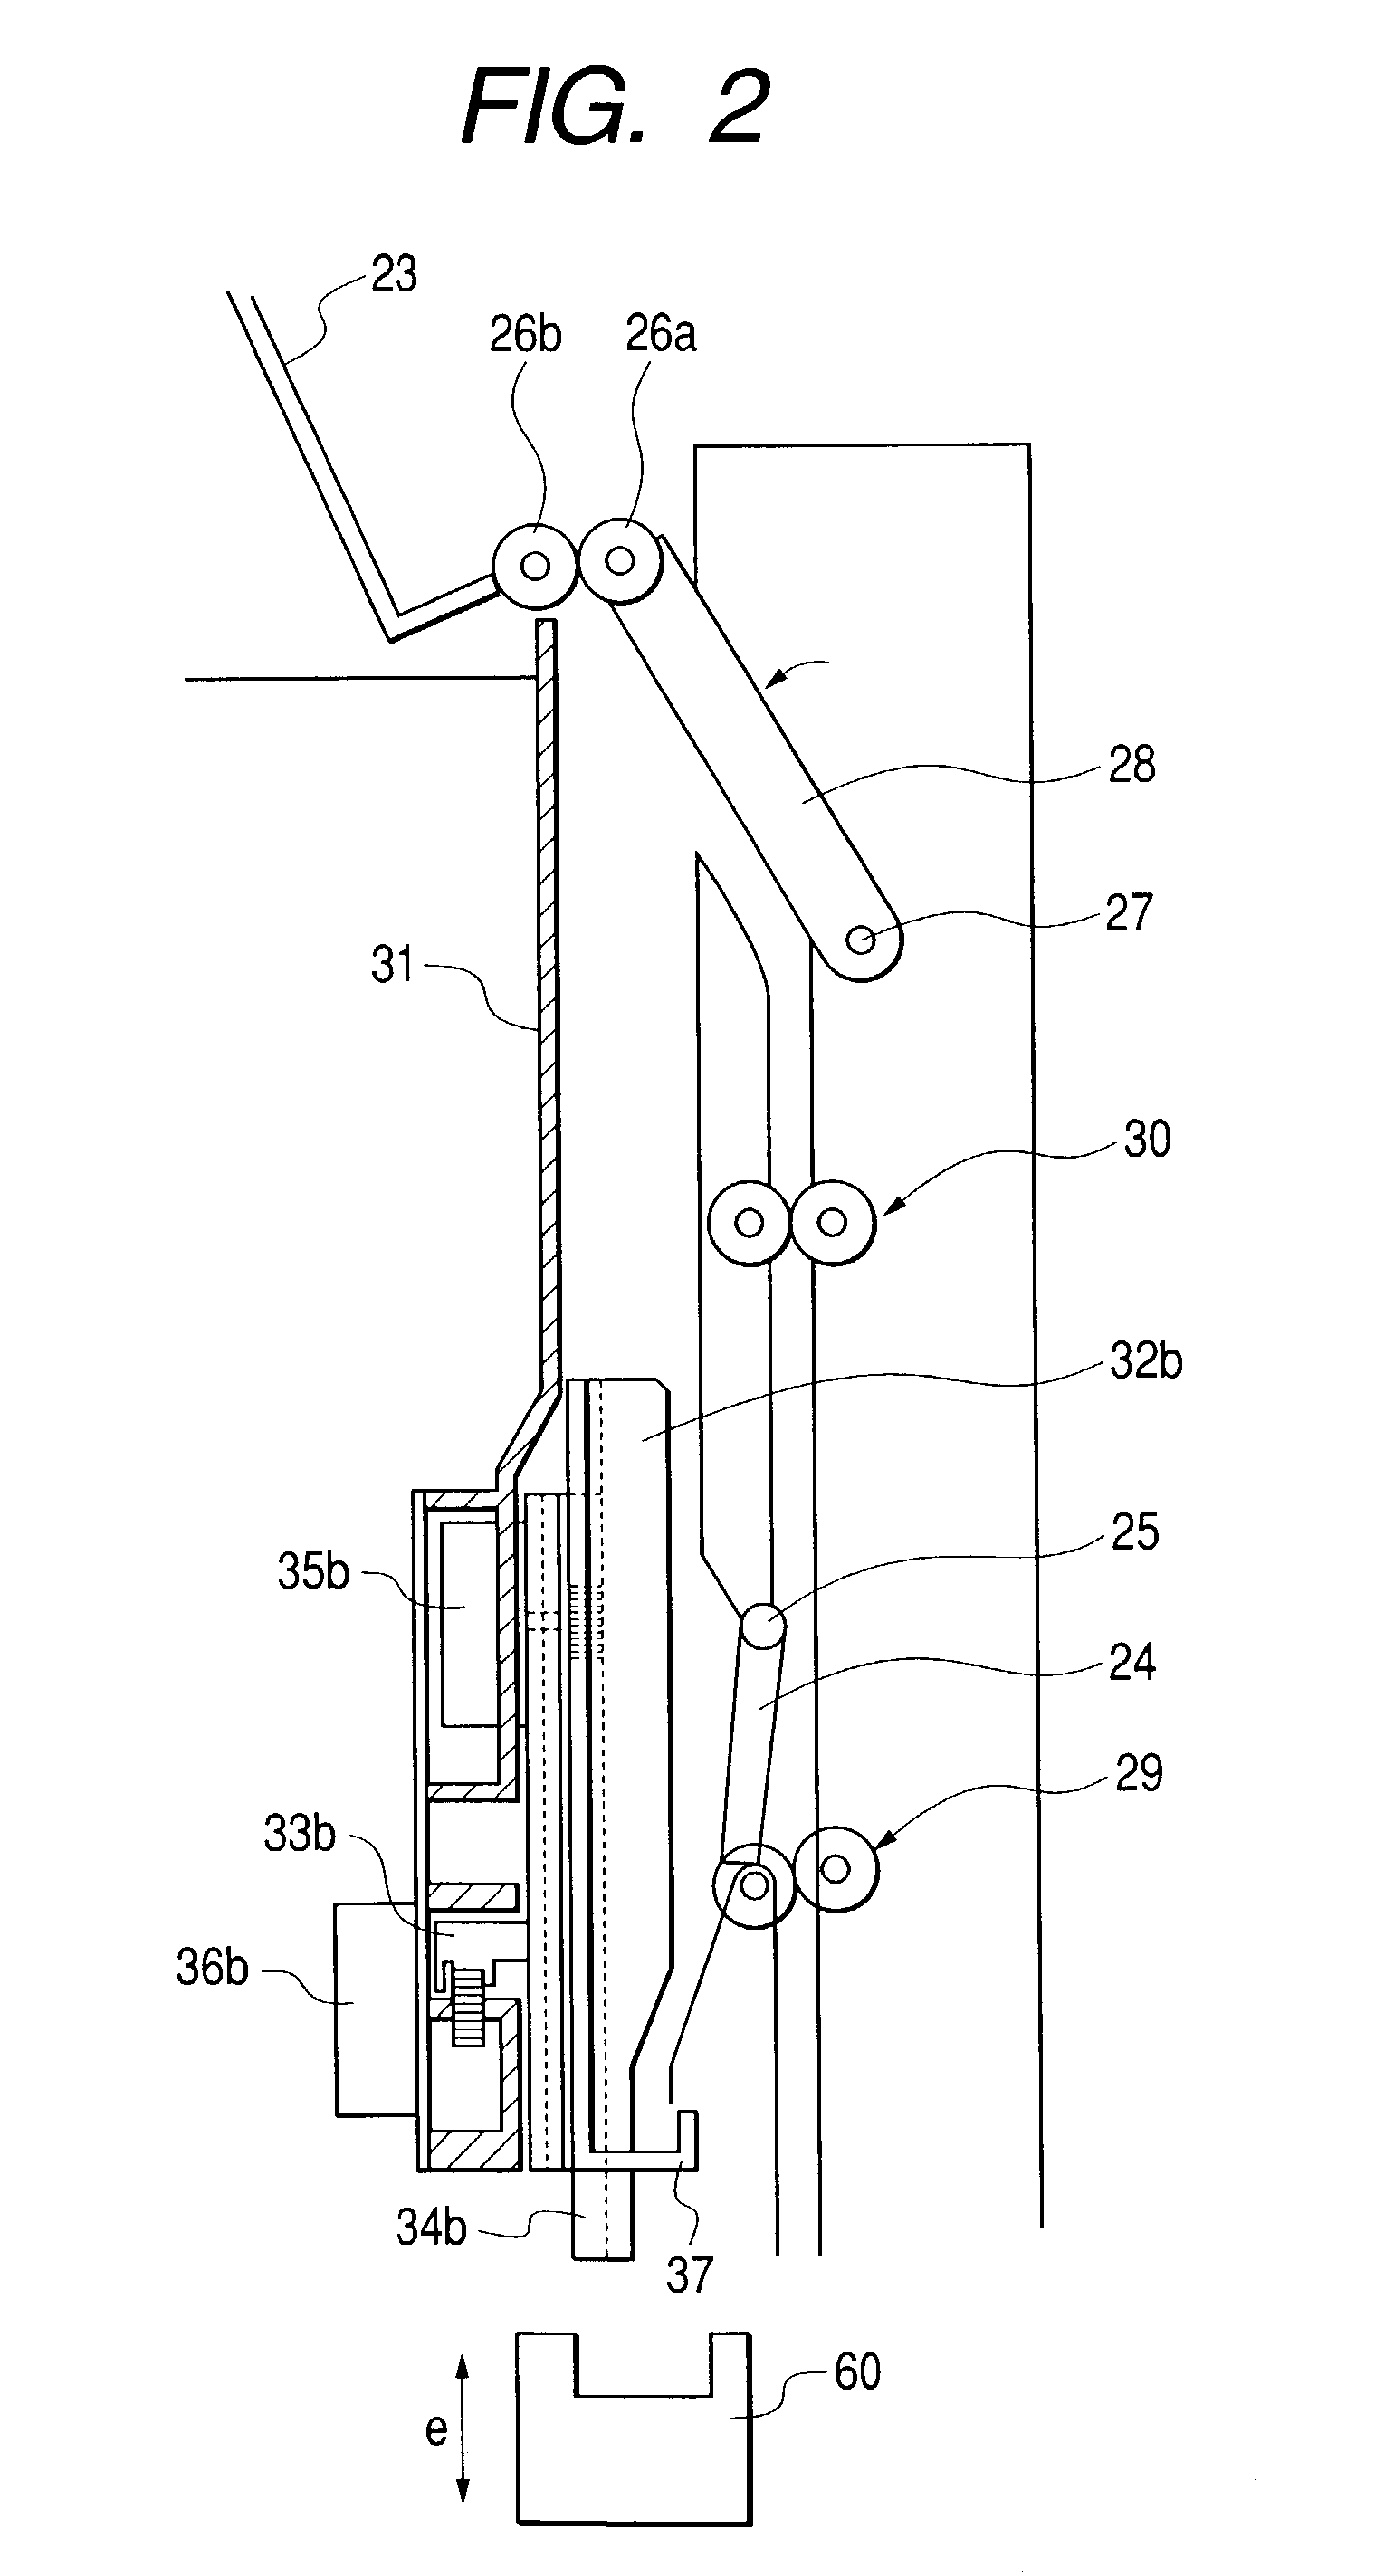 Vertical transporting sheet treating apparatus